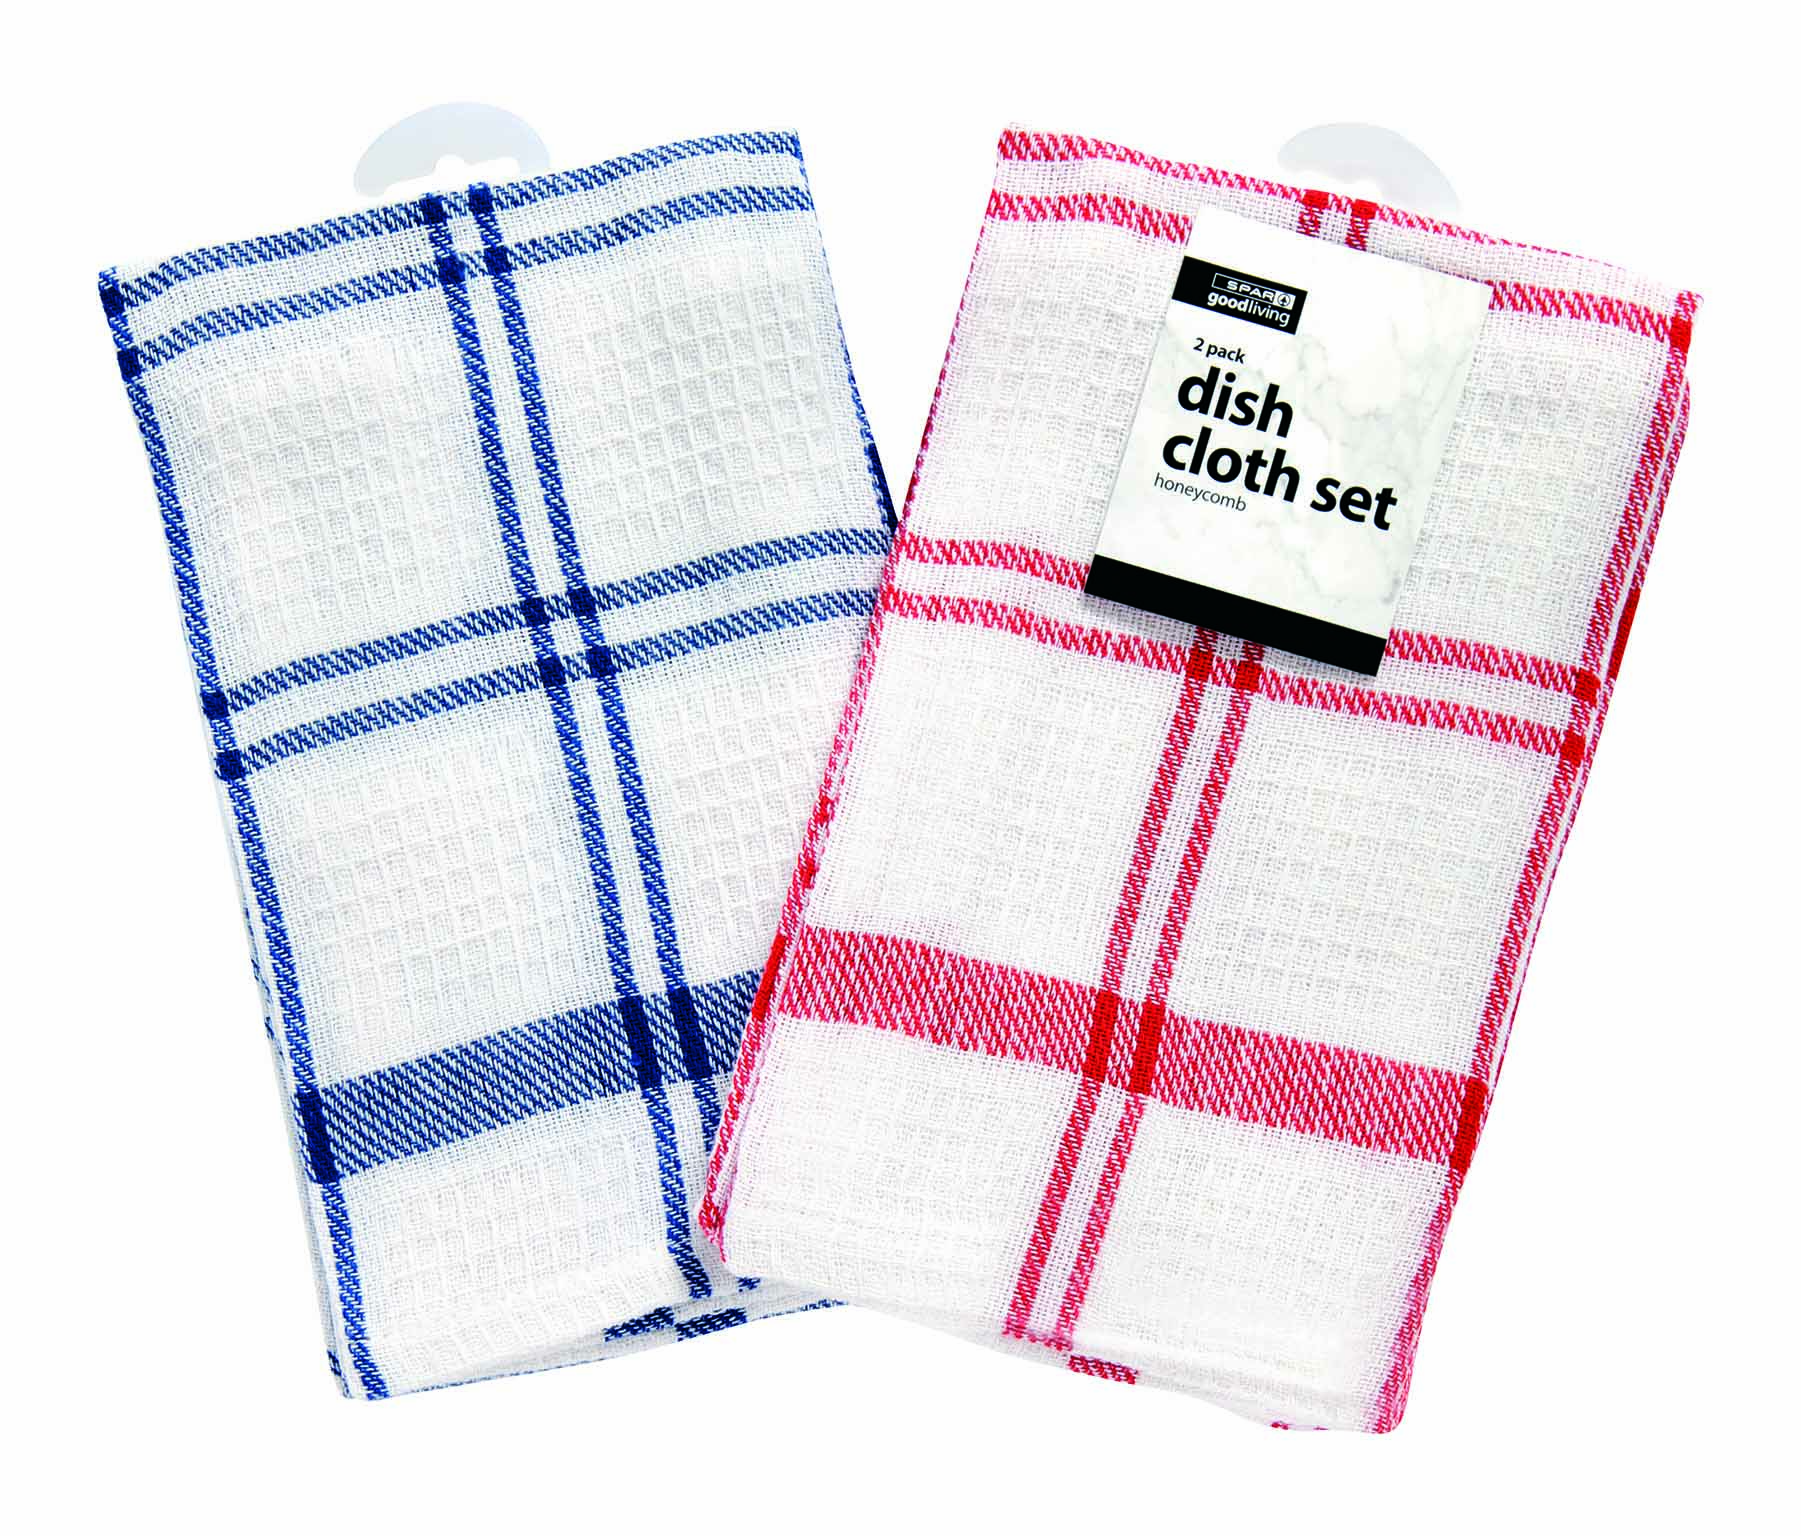 dish cloth set - honeycomb (2 pack)